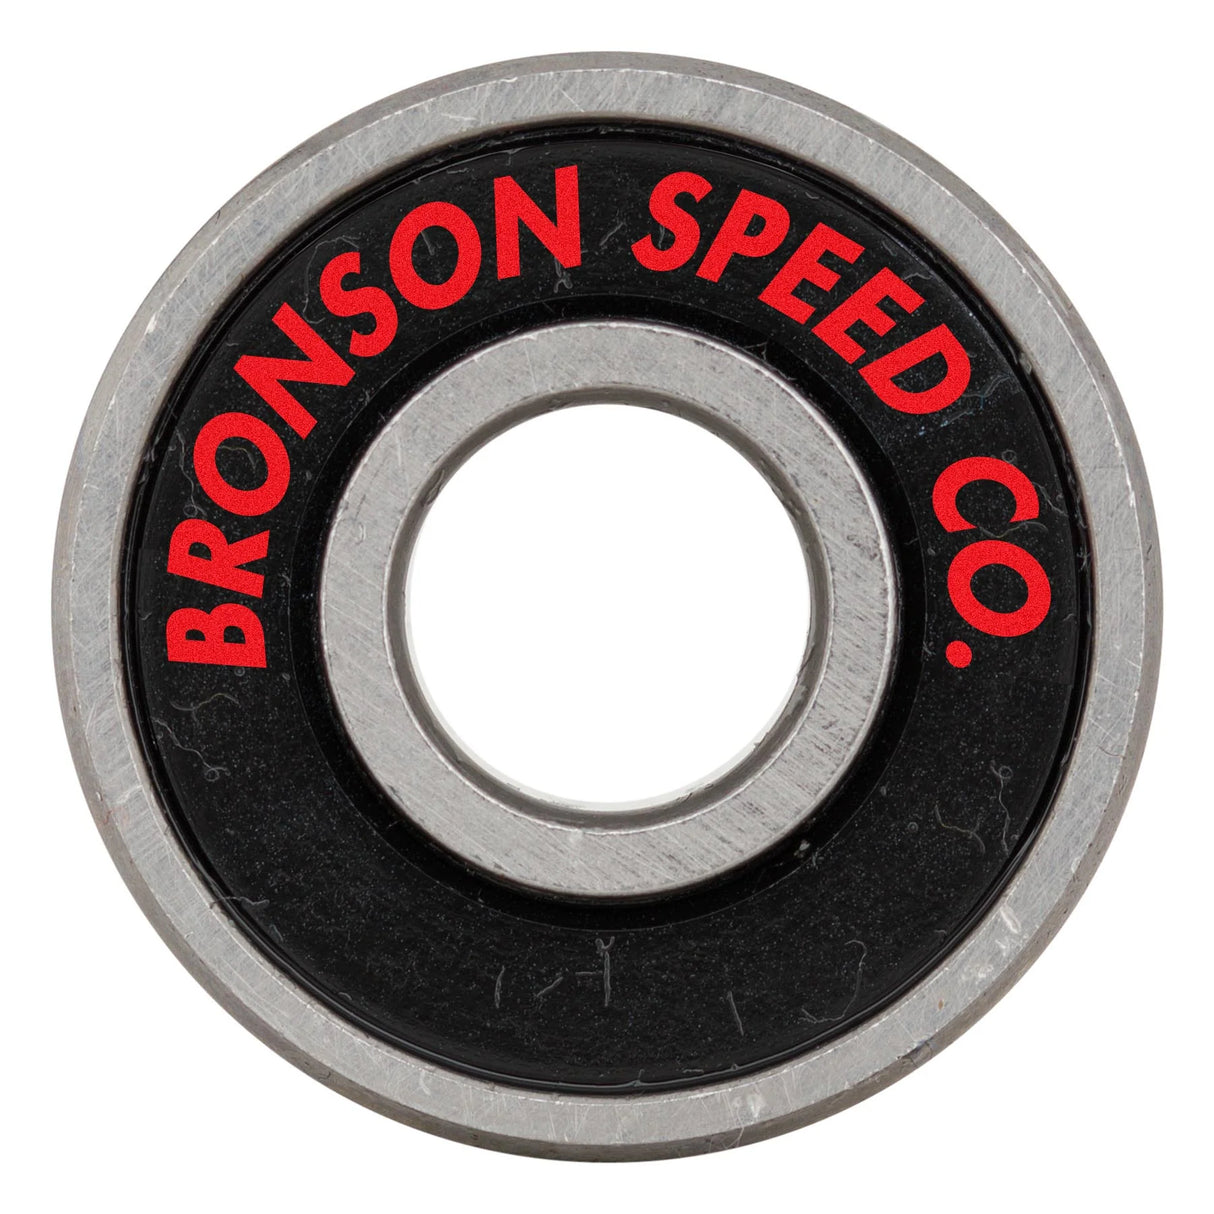 Bronson Speed Co. Felipe Nunes Pro G3 Bearings